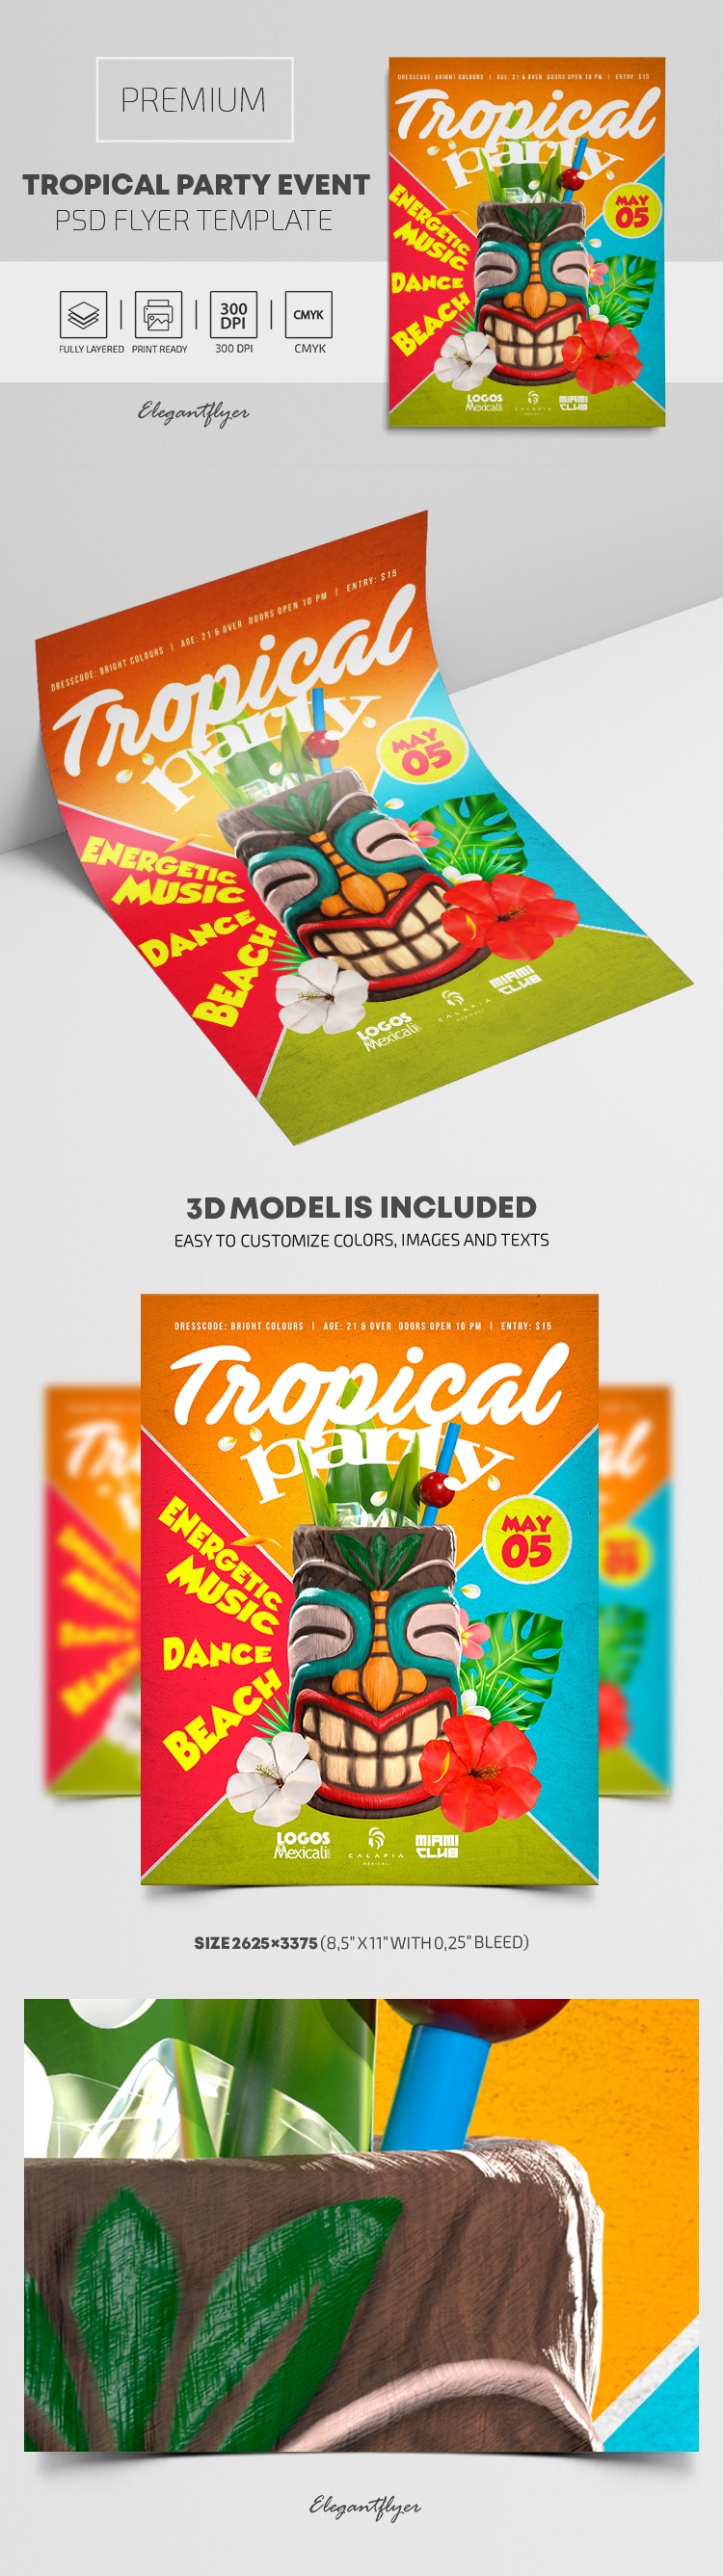 Tropical Party Event Flyer by ElegantFlyer